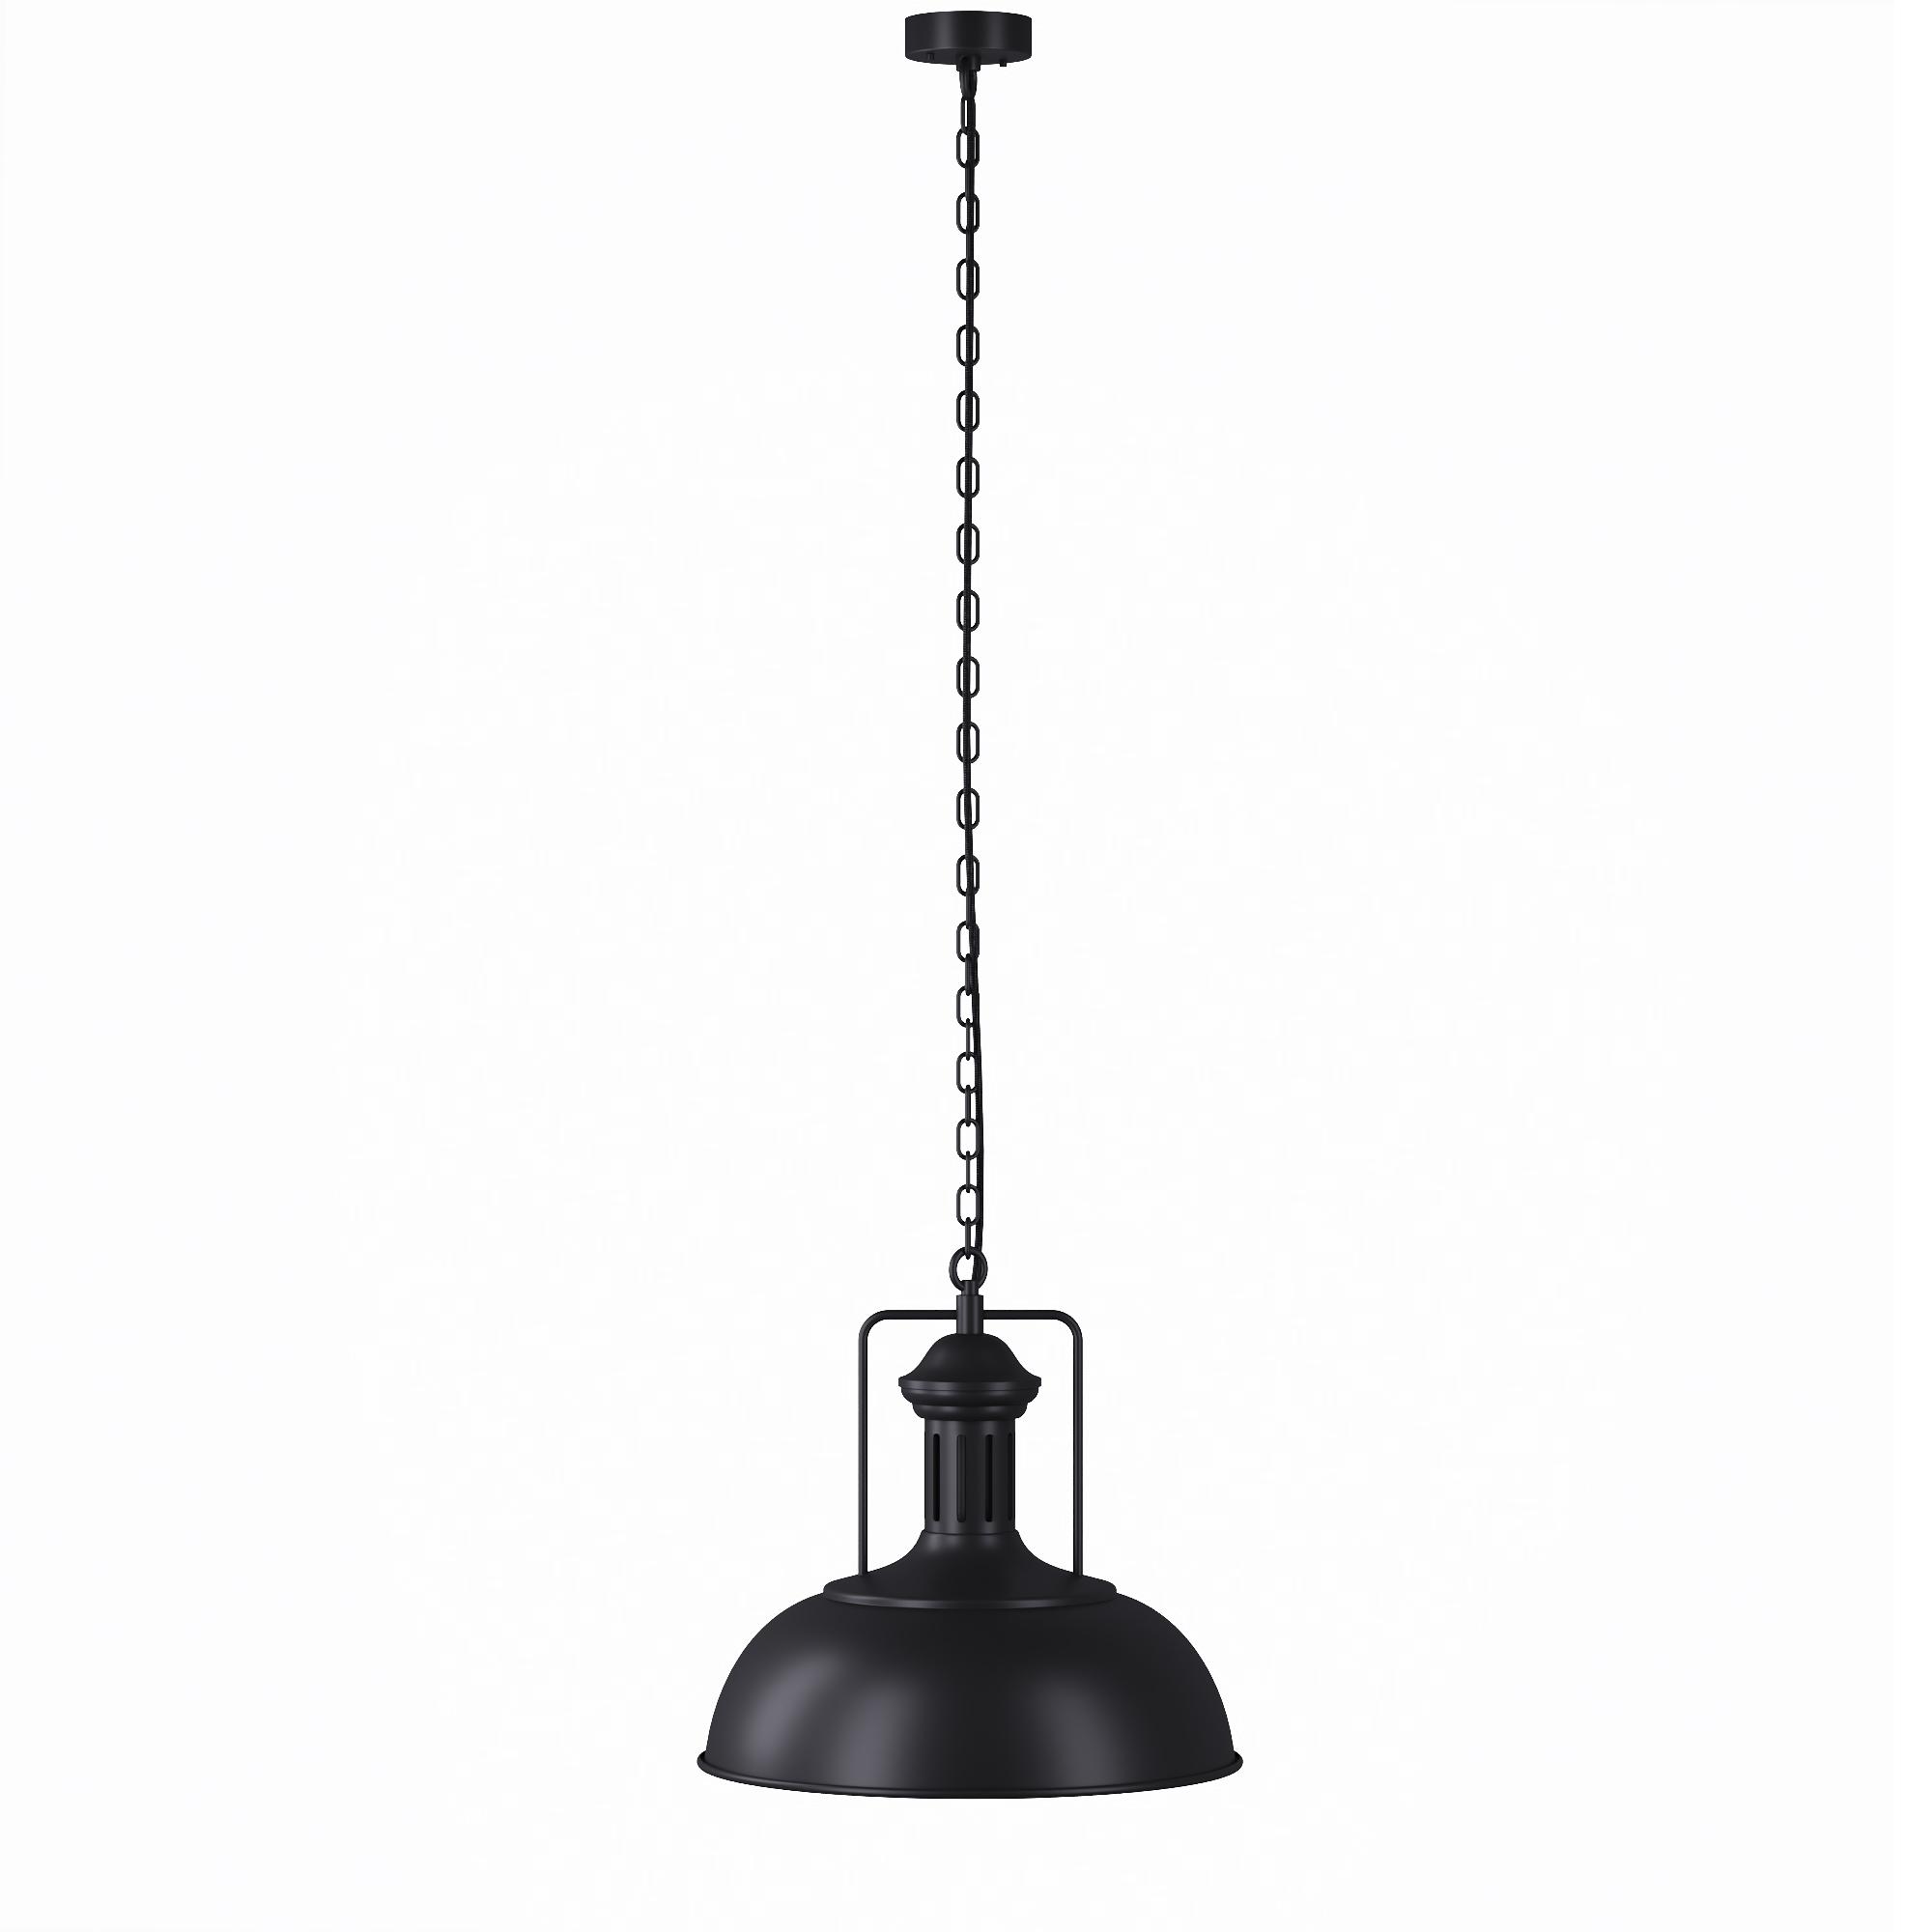 Blacky lamp, SKU. 5511 by Pikartlights 3d model